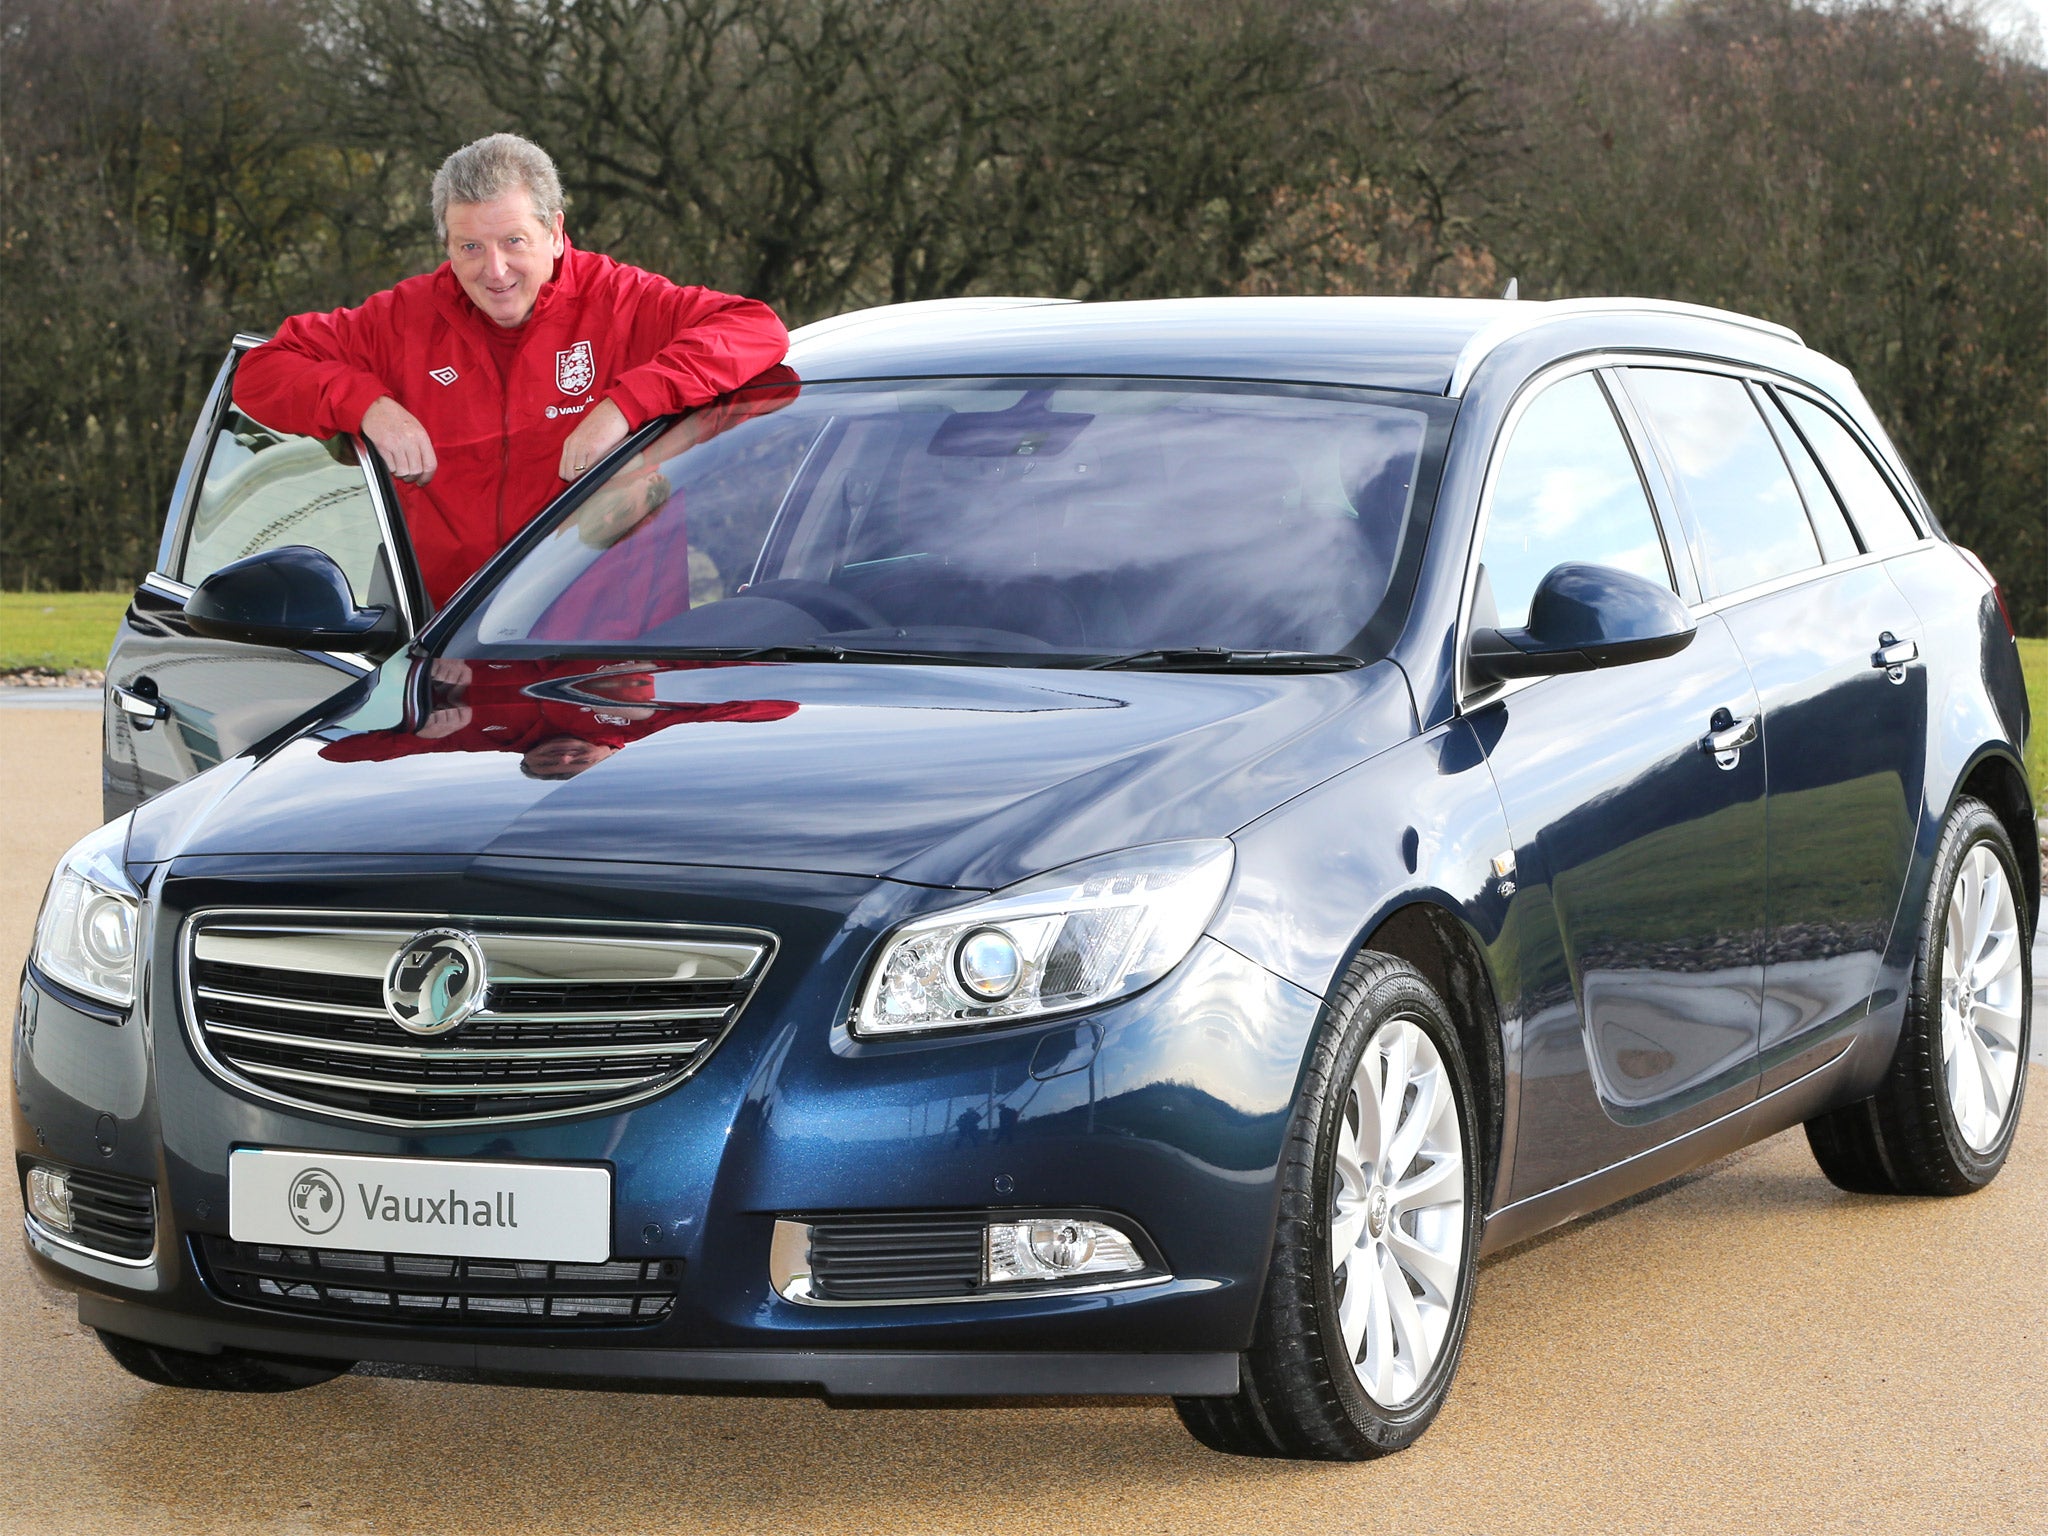 Sensible choice: Roy Hodgson and his shiny new Vauxhall Insignia